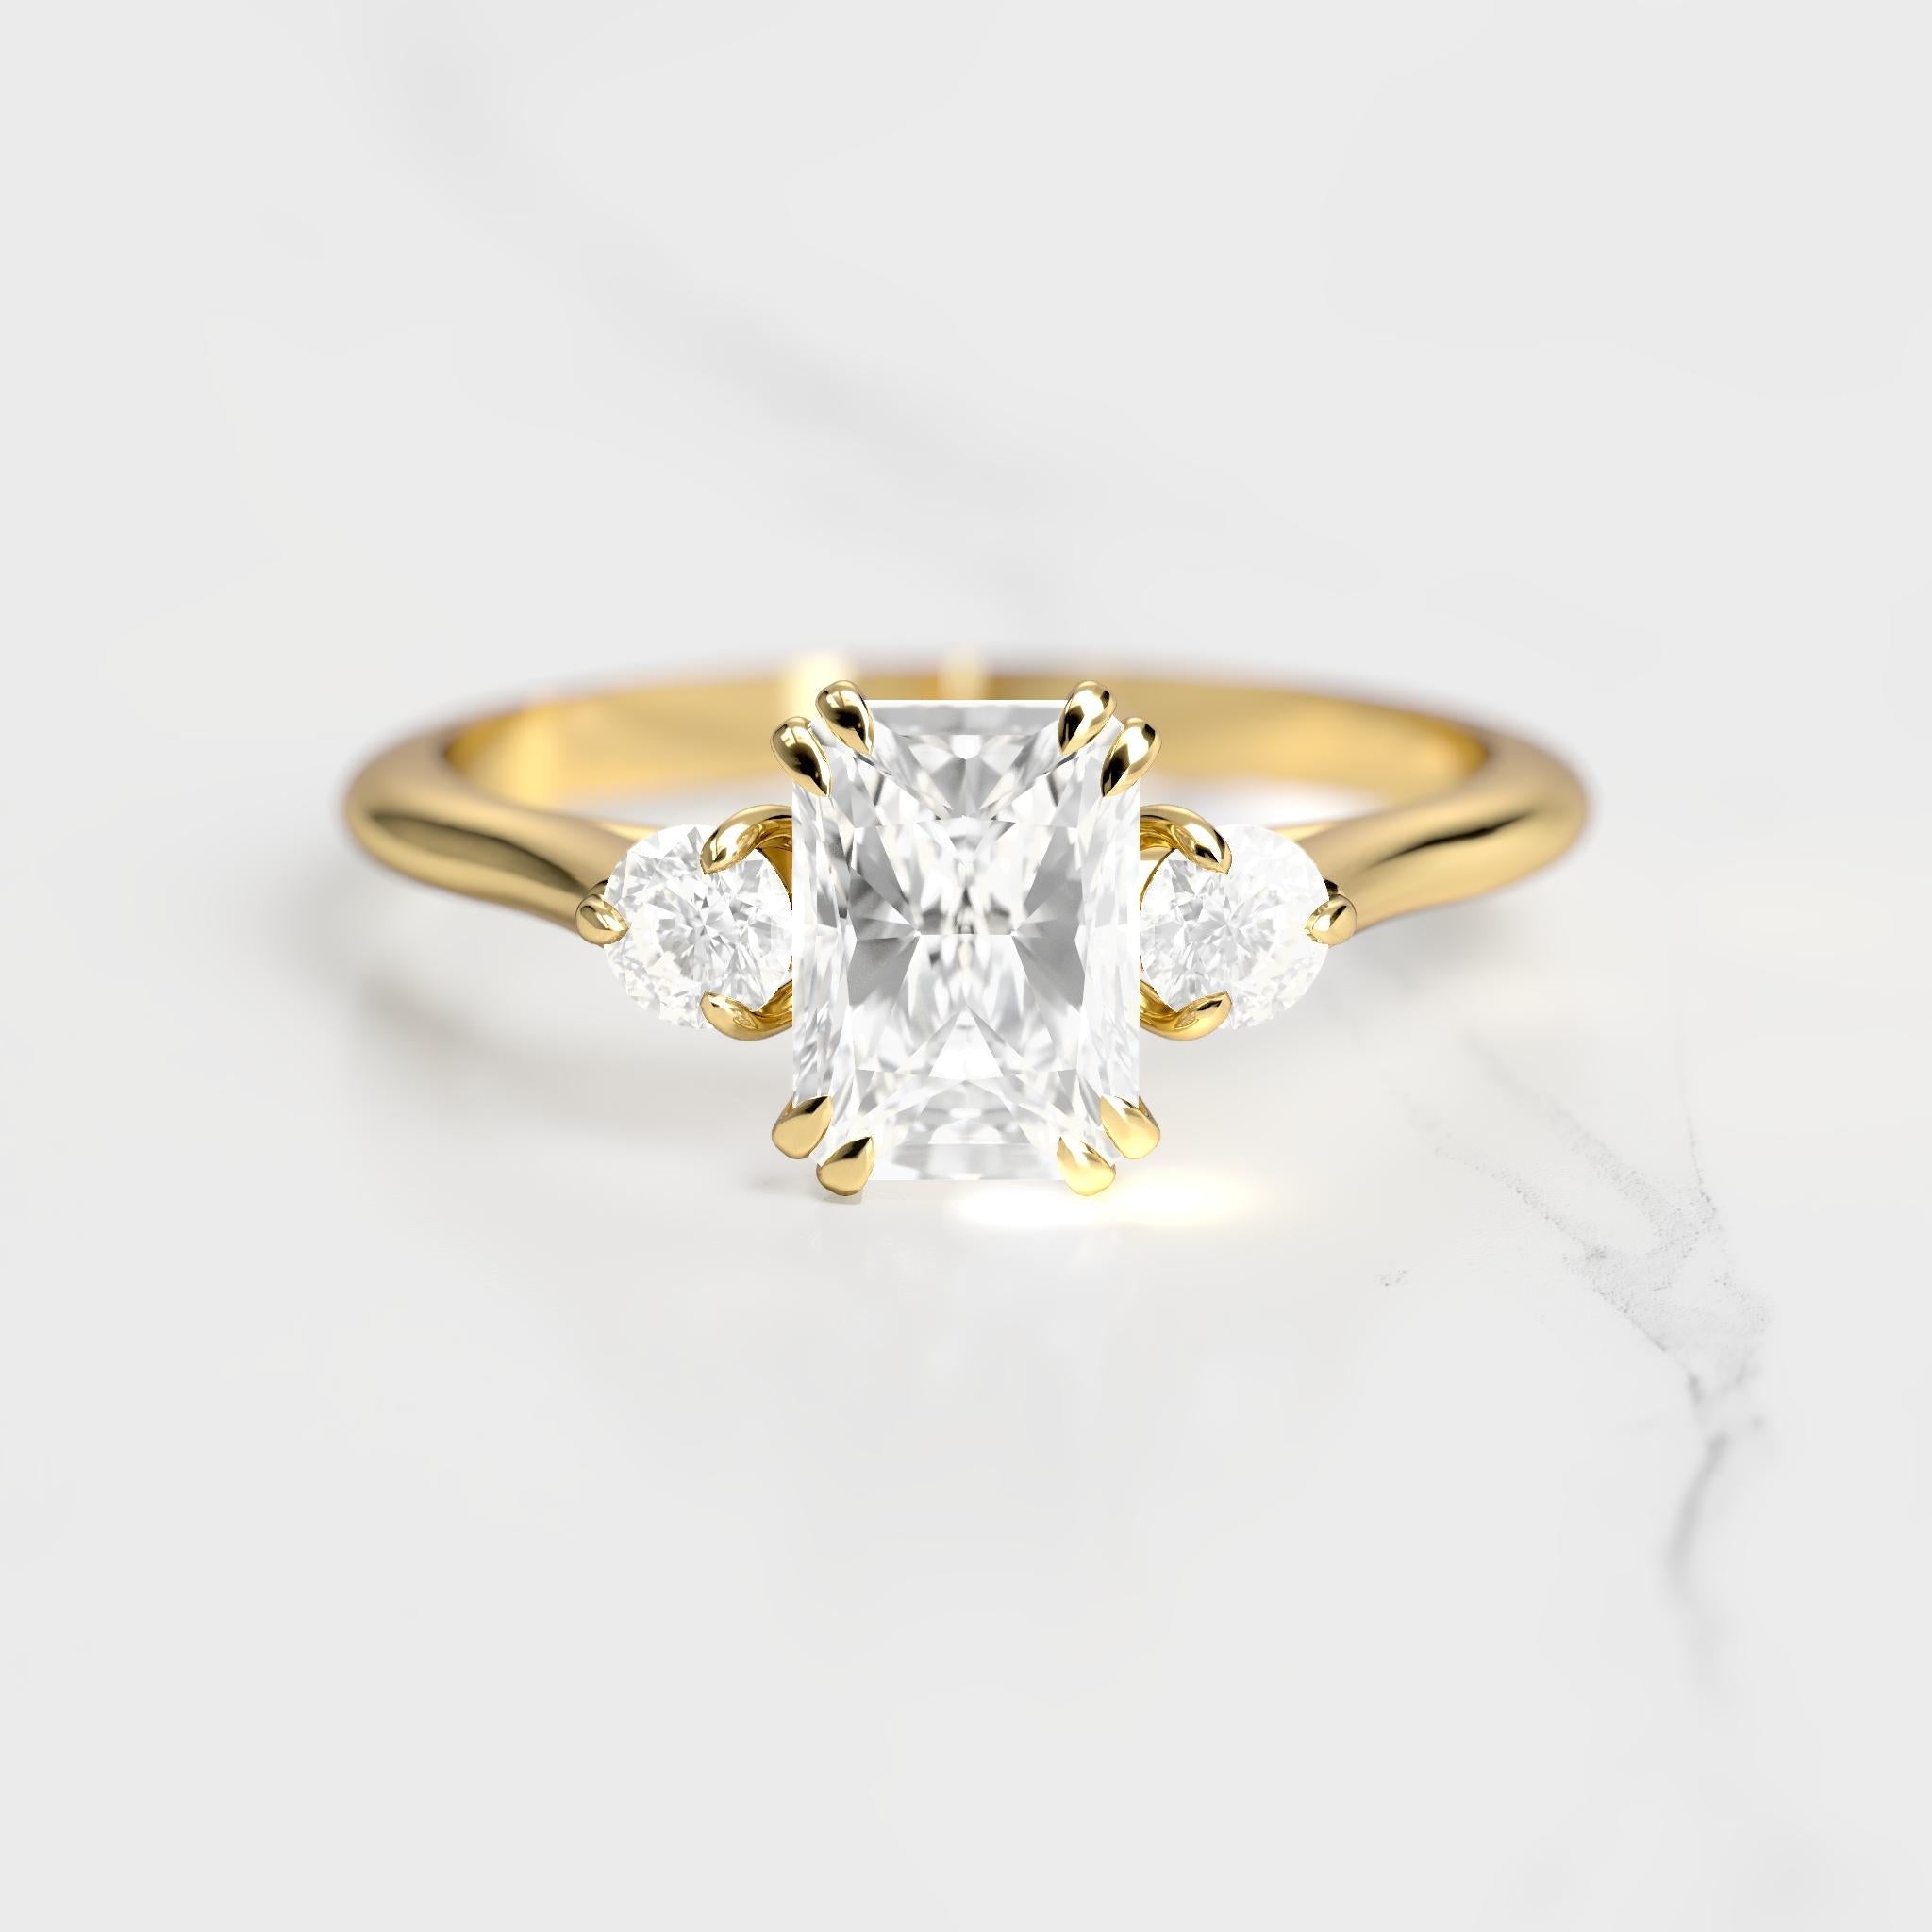 Radiant Diamond Ring With Accent Stones - platinum / 0.3ct / lab diamond